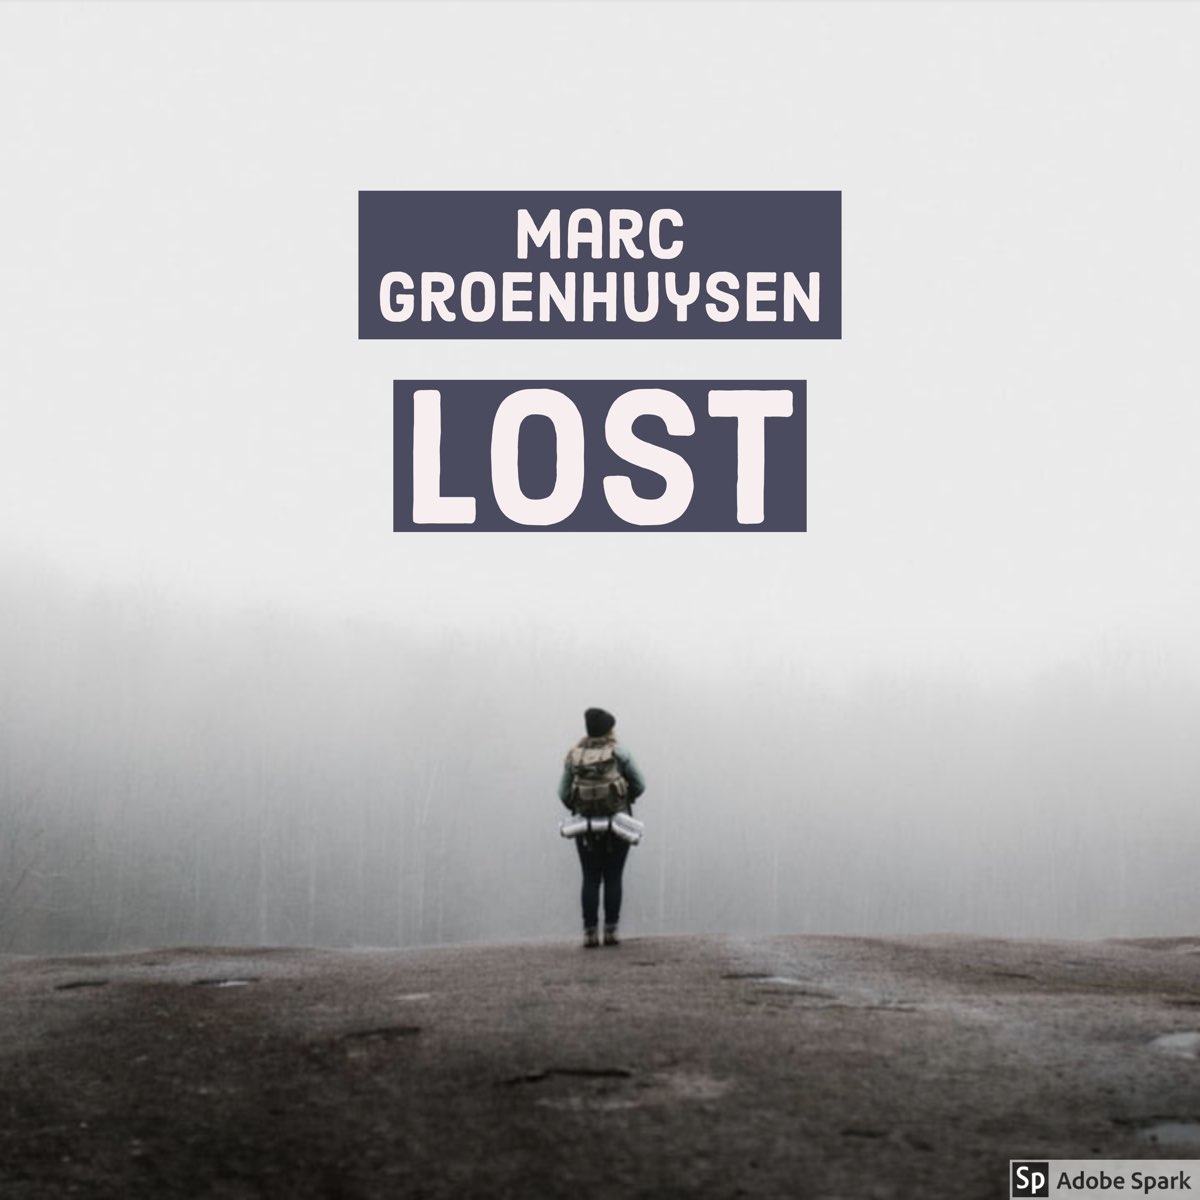 Lost mark. Lost Marc.